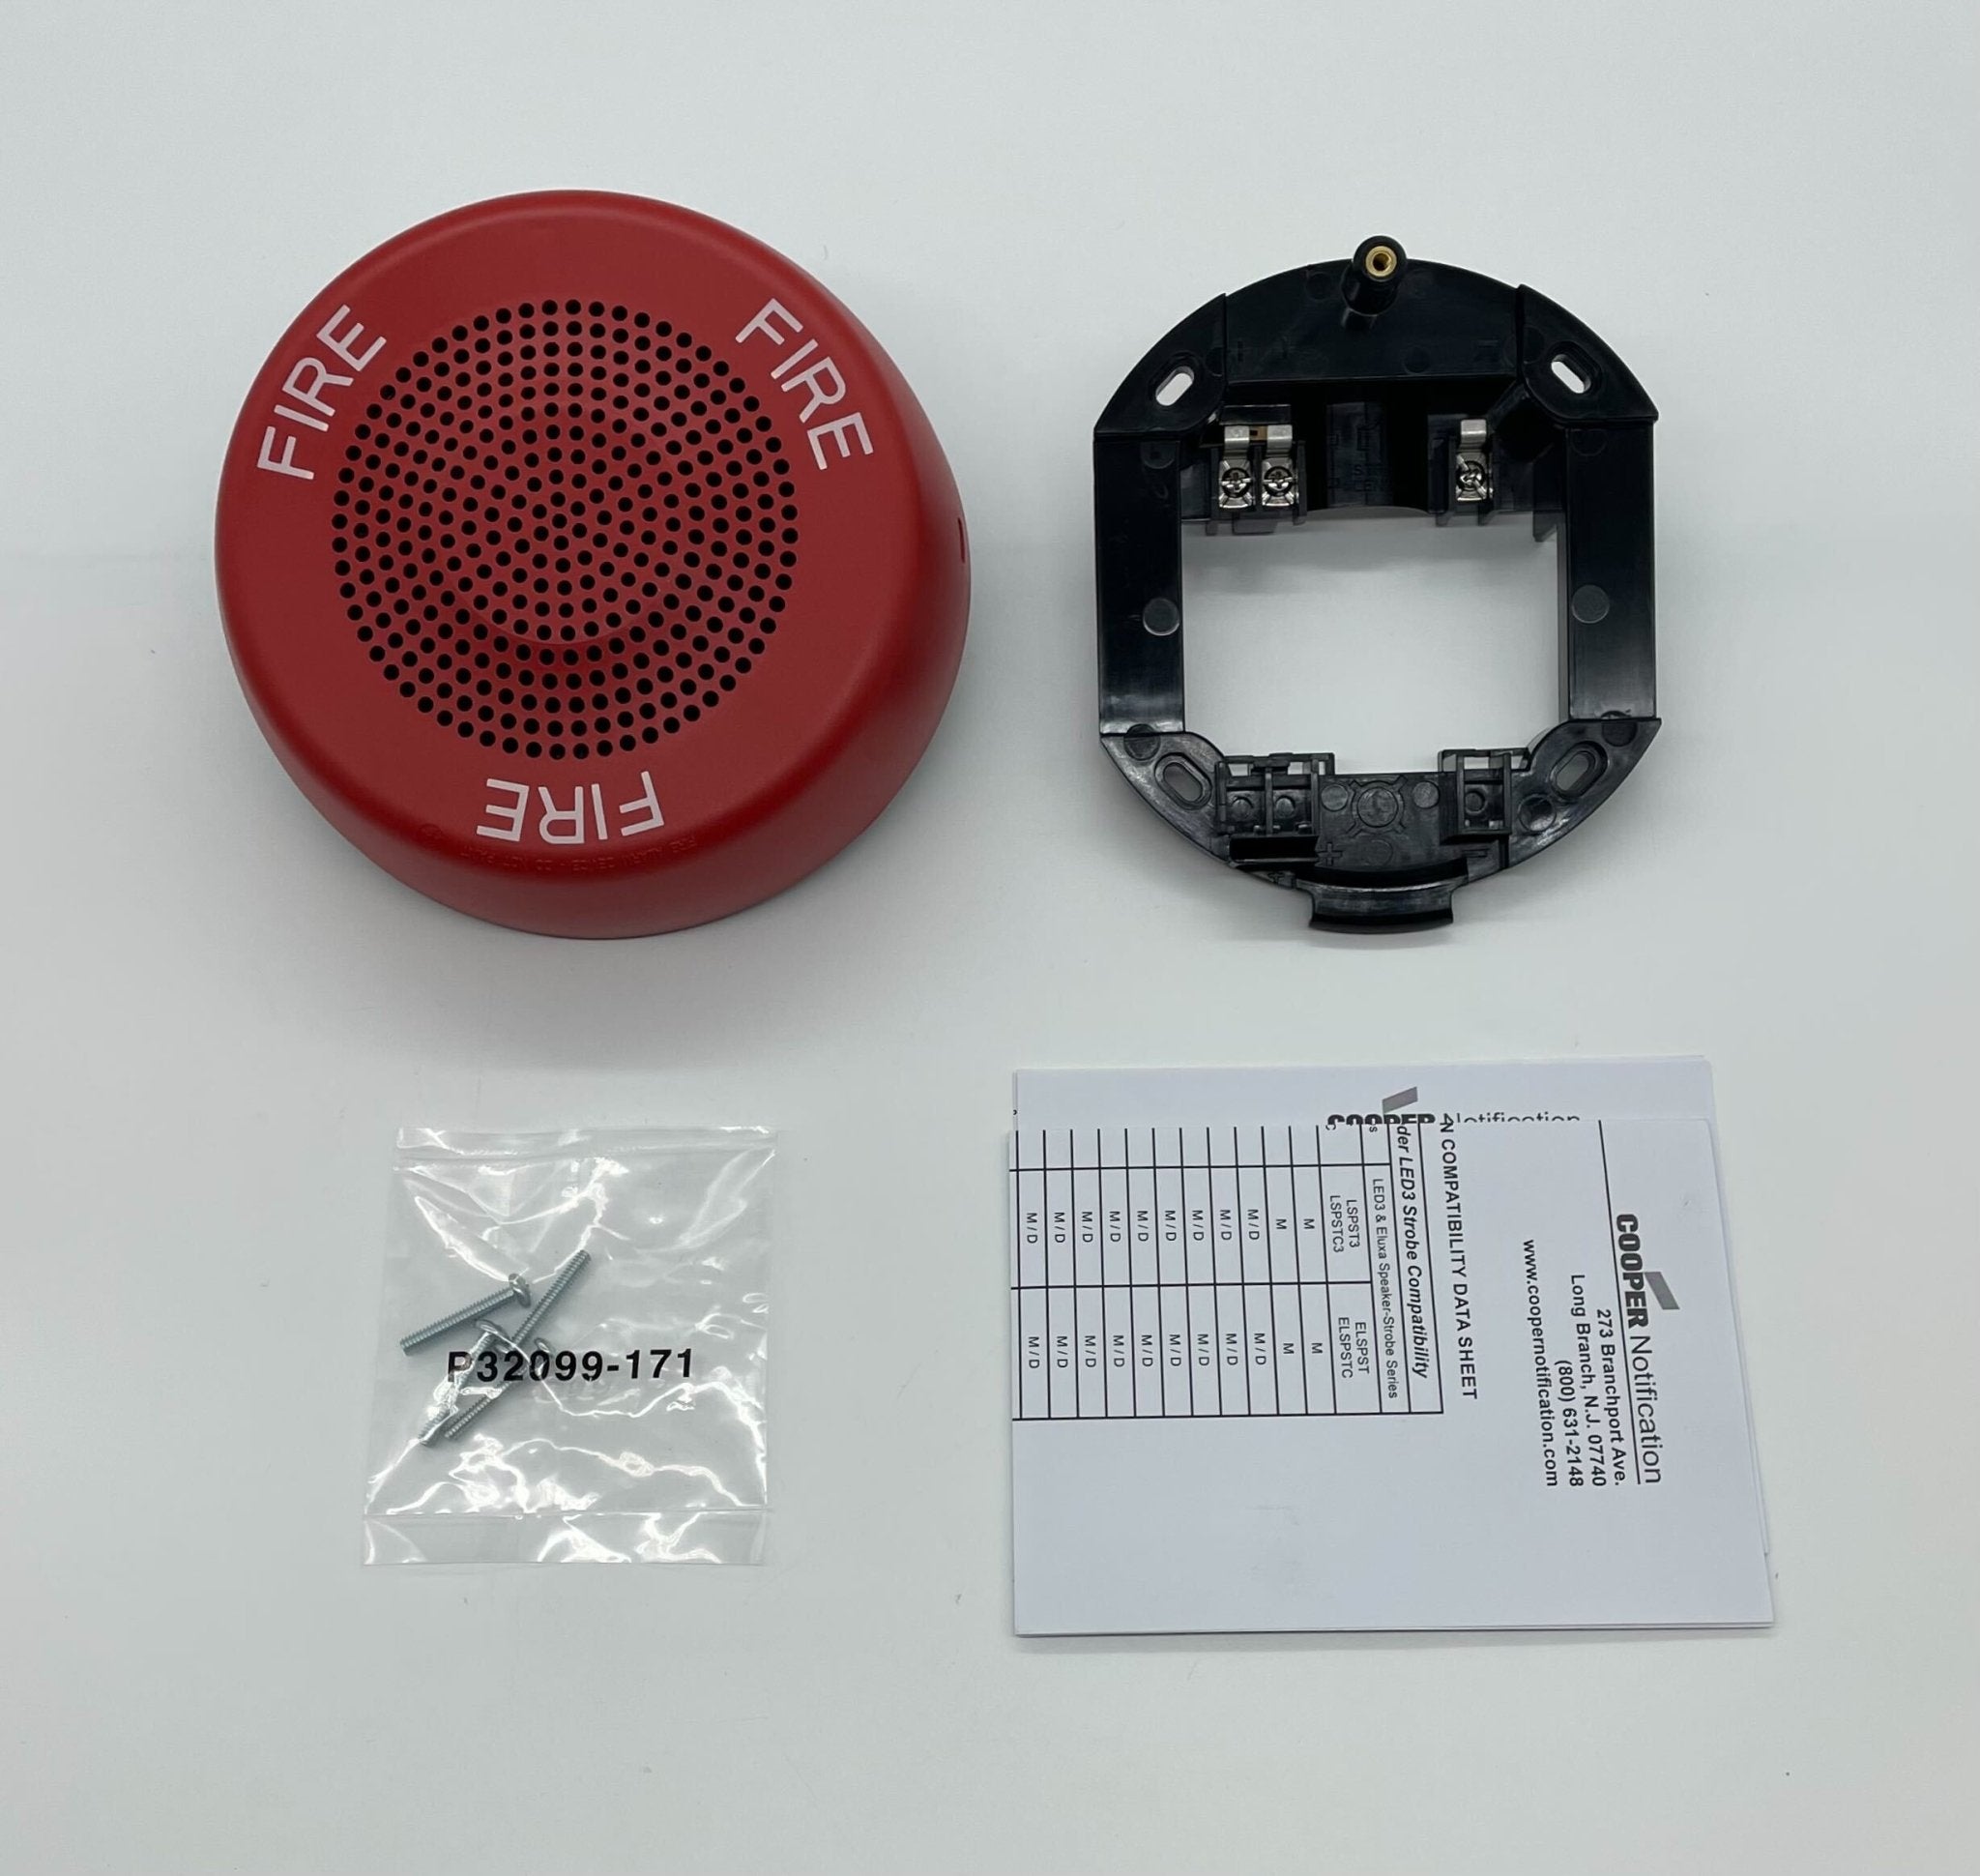 Wheelock ELSPKRC - The Fire Alarm Supplier